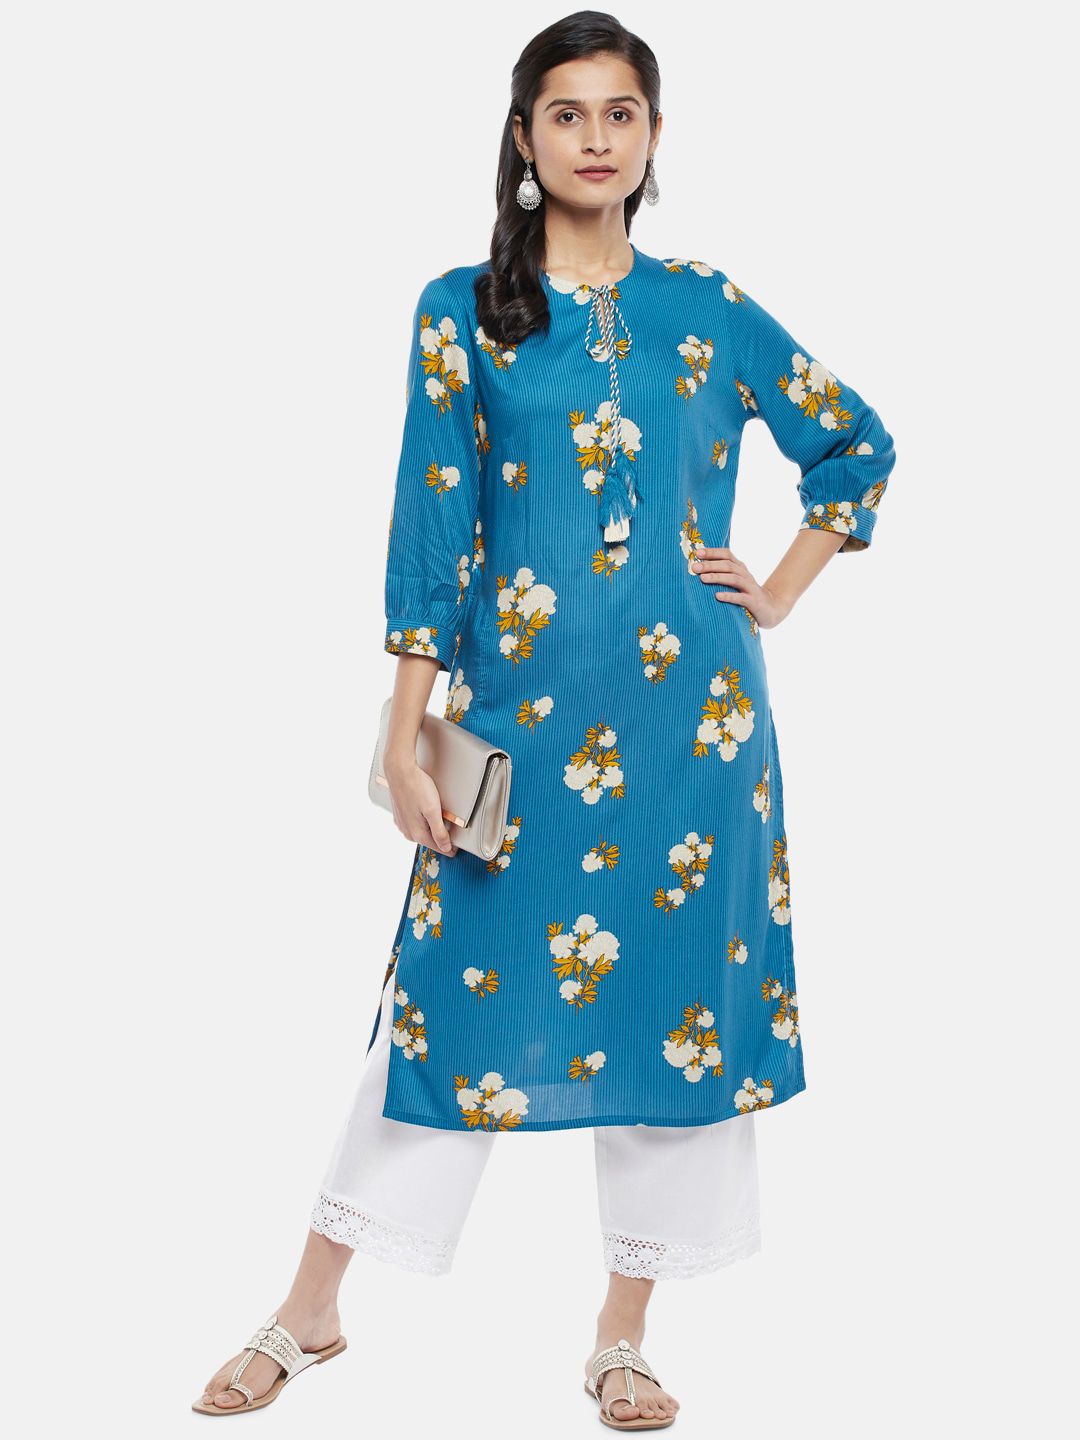 RANGMANCH BY PANTALOONS Women Blue Floral Printed Thread Work Kurta Price in India